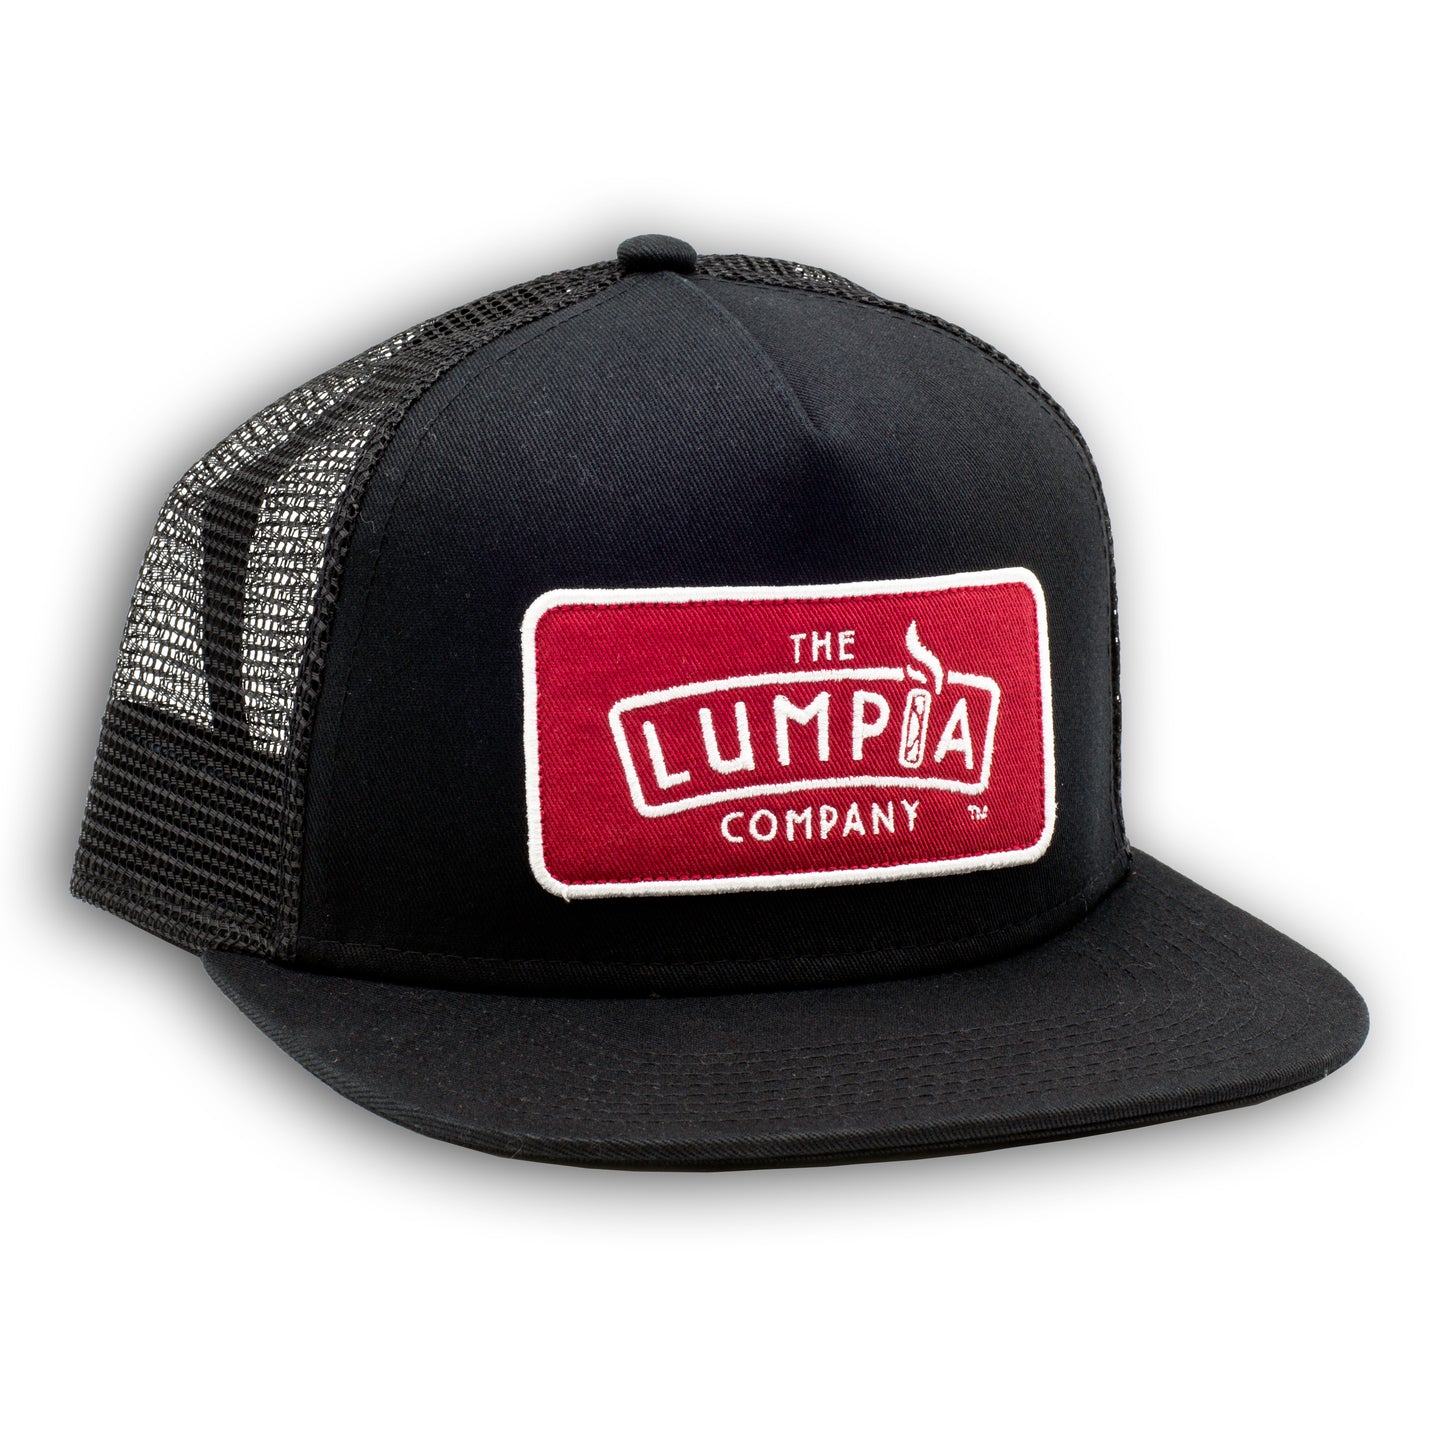 The Lumpia Company Black Trucker Hat